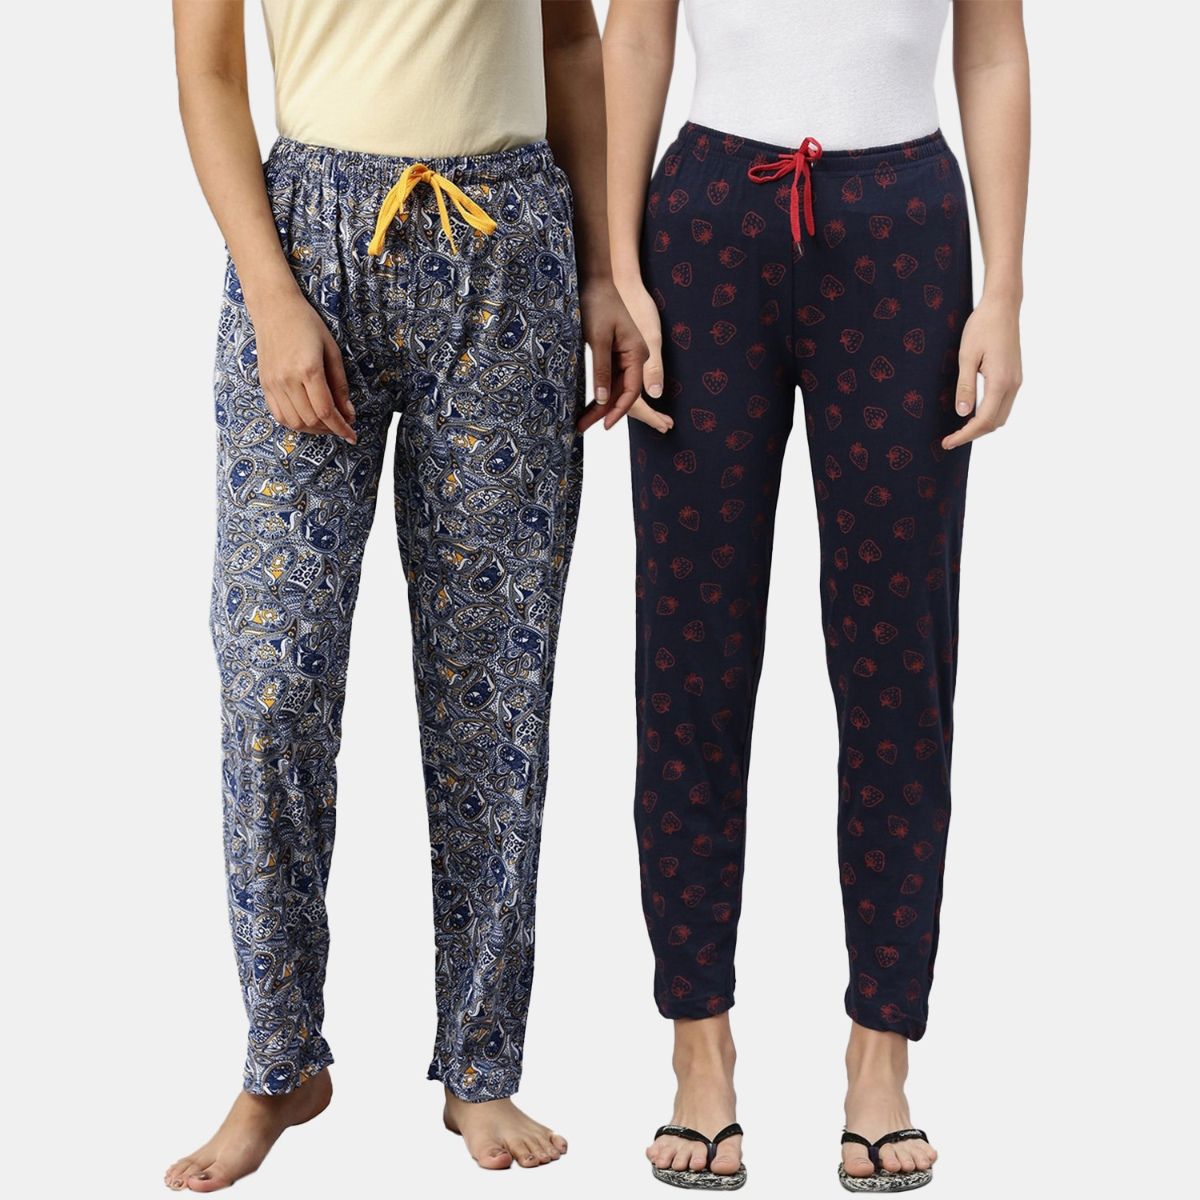 Buy CYZ Mens 100% Cotton Pajama Pants Sleep Lounge Pajamas for Men Woven pj  Pants, F127, Small at Amazon.in